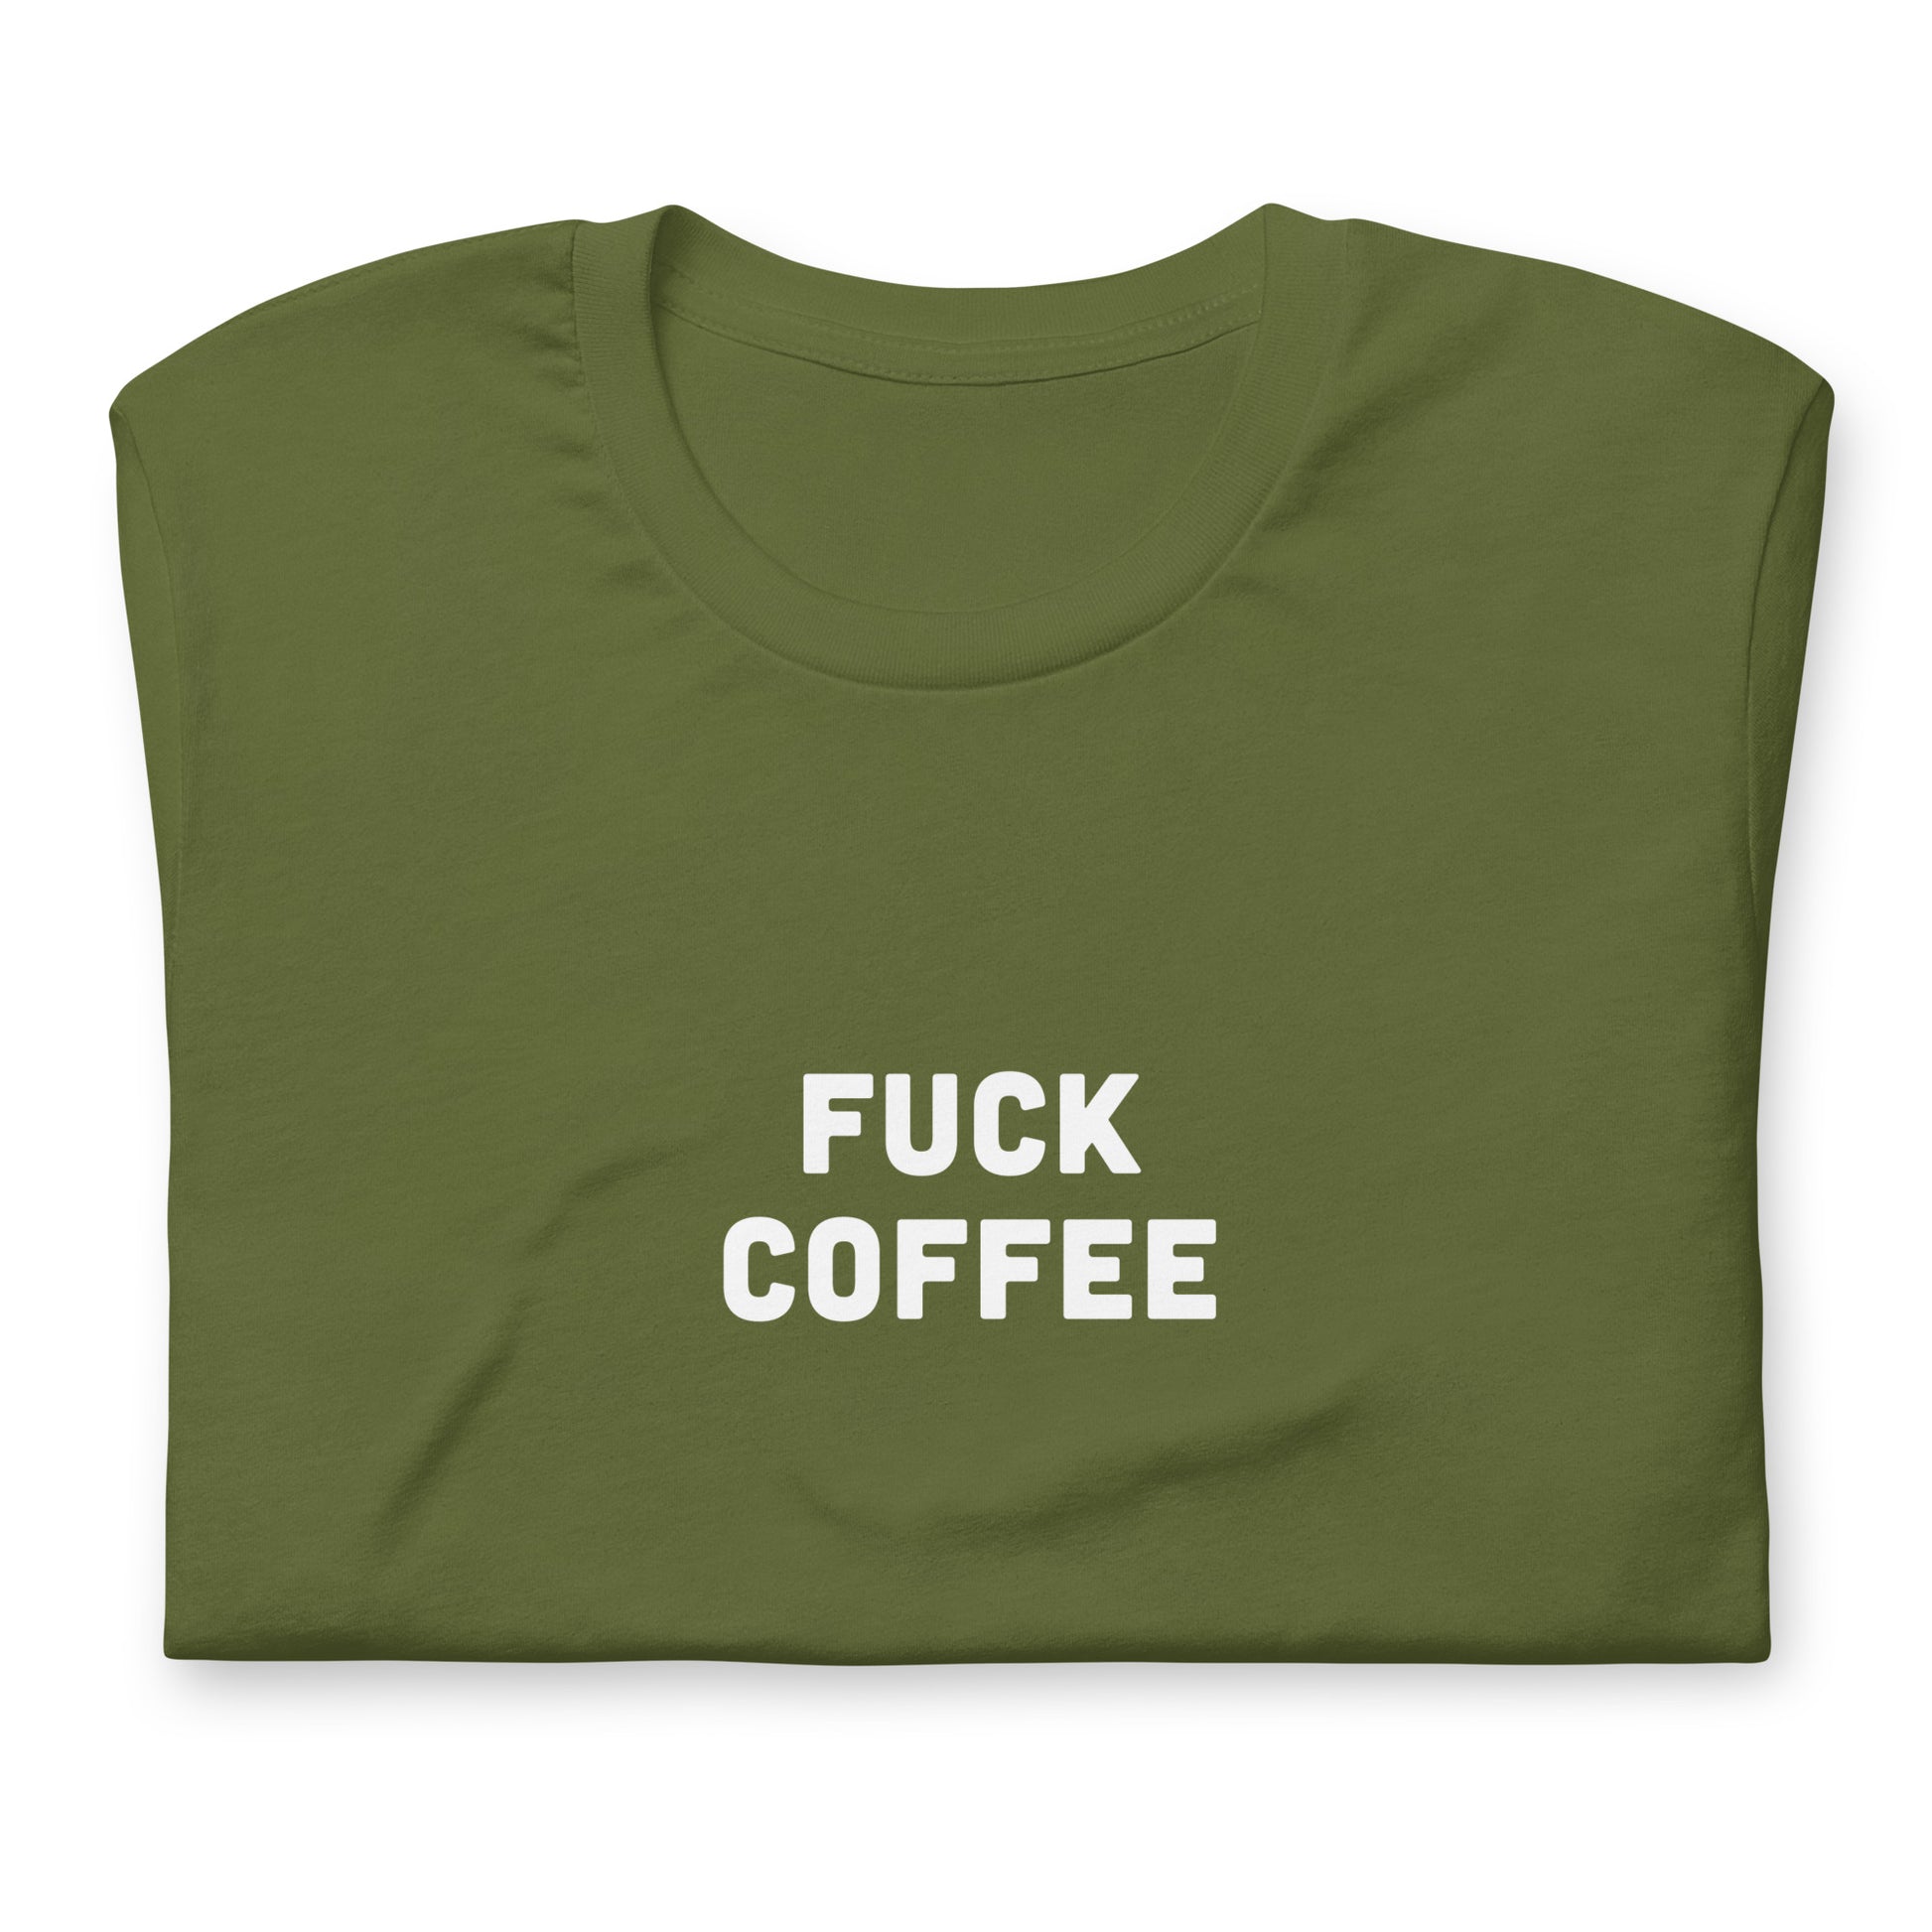 Fuck Coffee T-Shirt Size 2XL Color Black